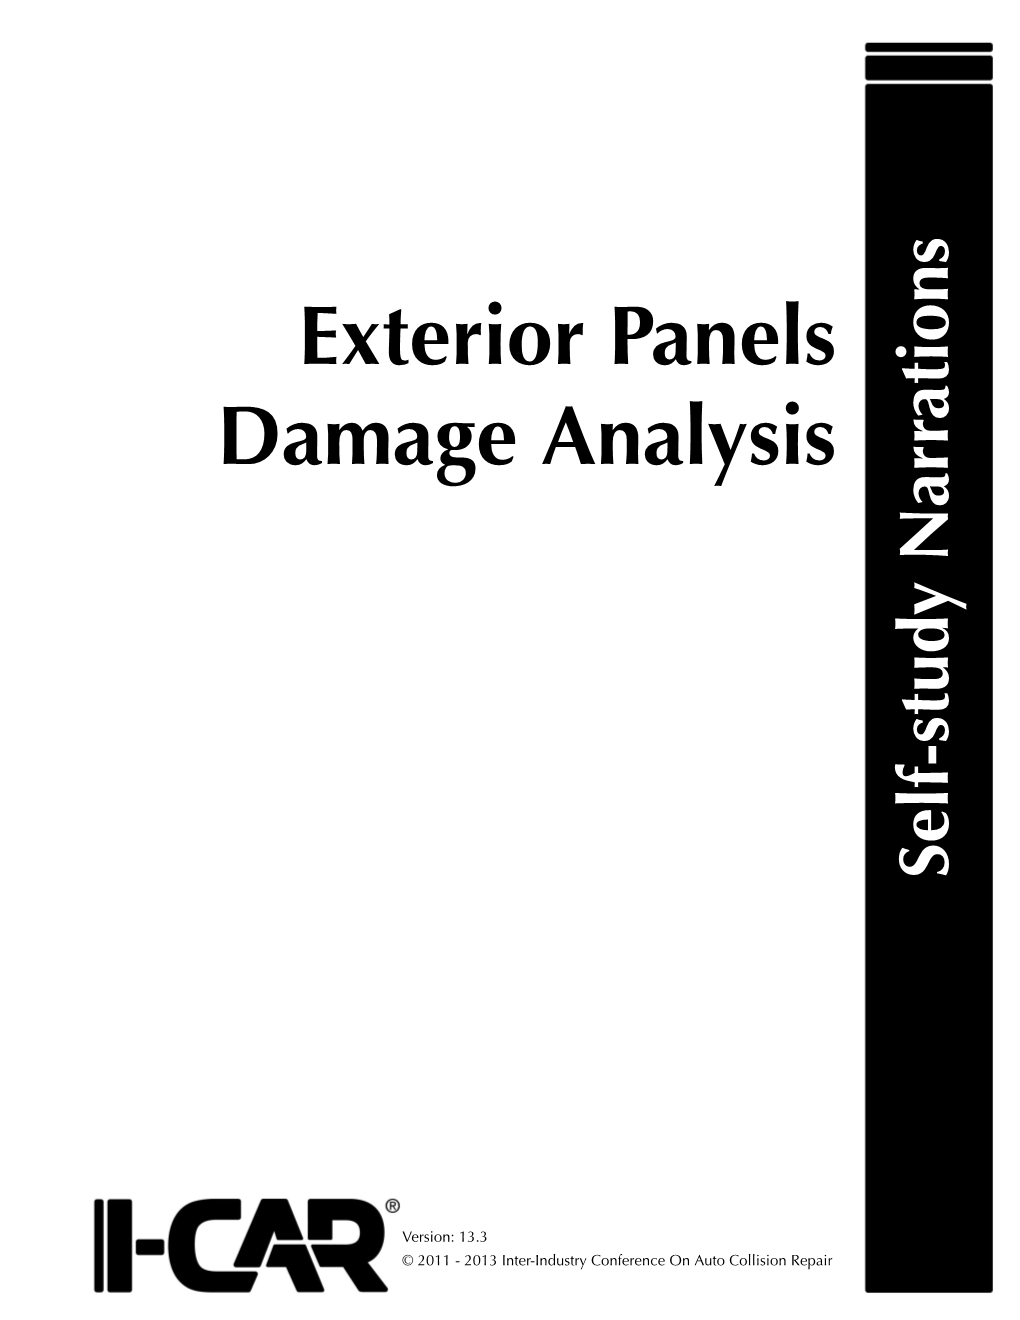 Exterior Panels Damage Analysis